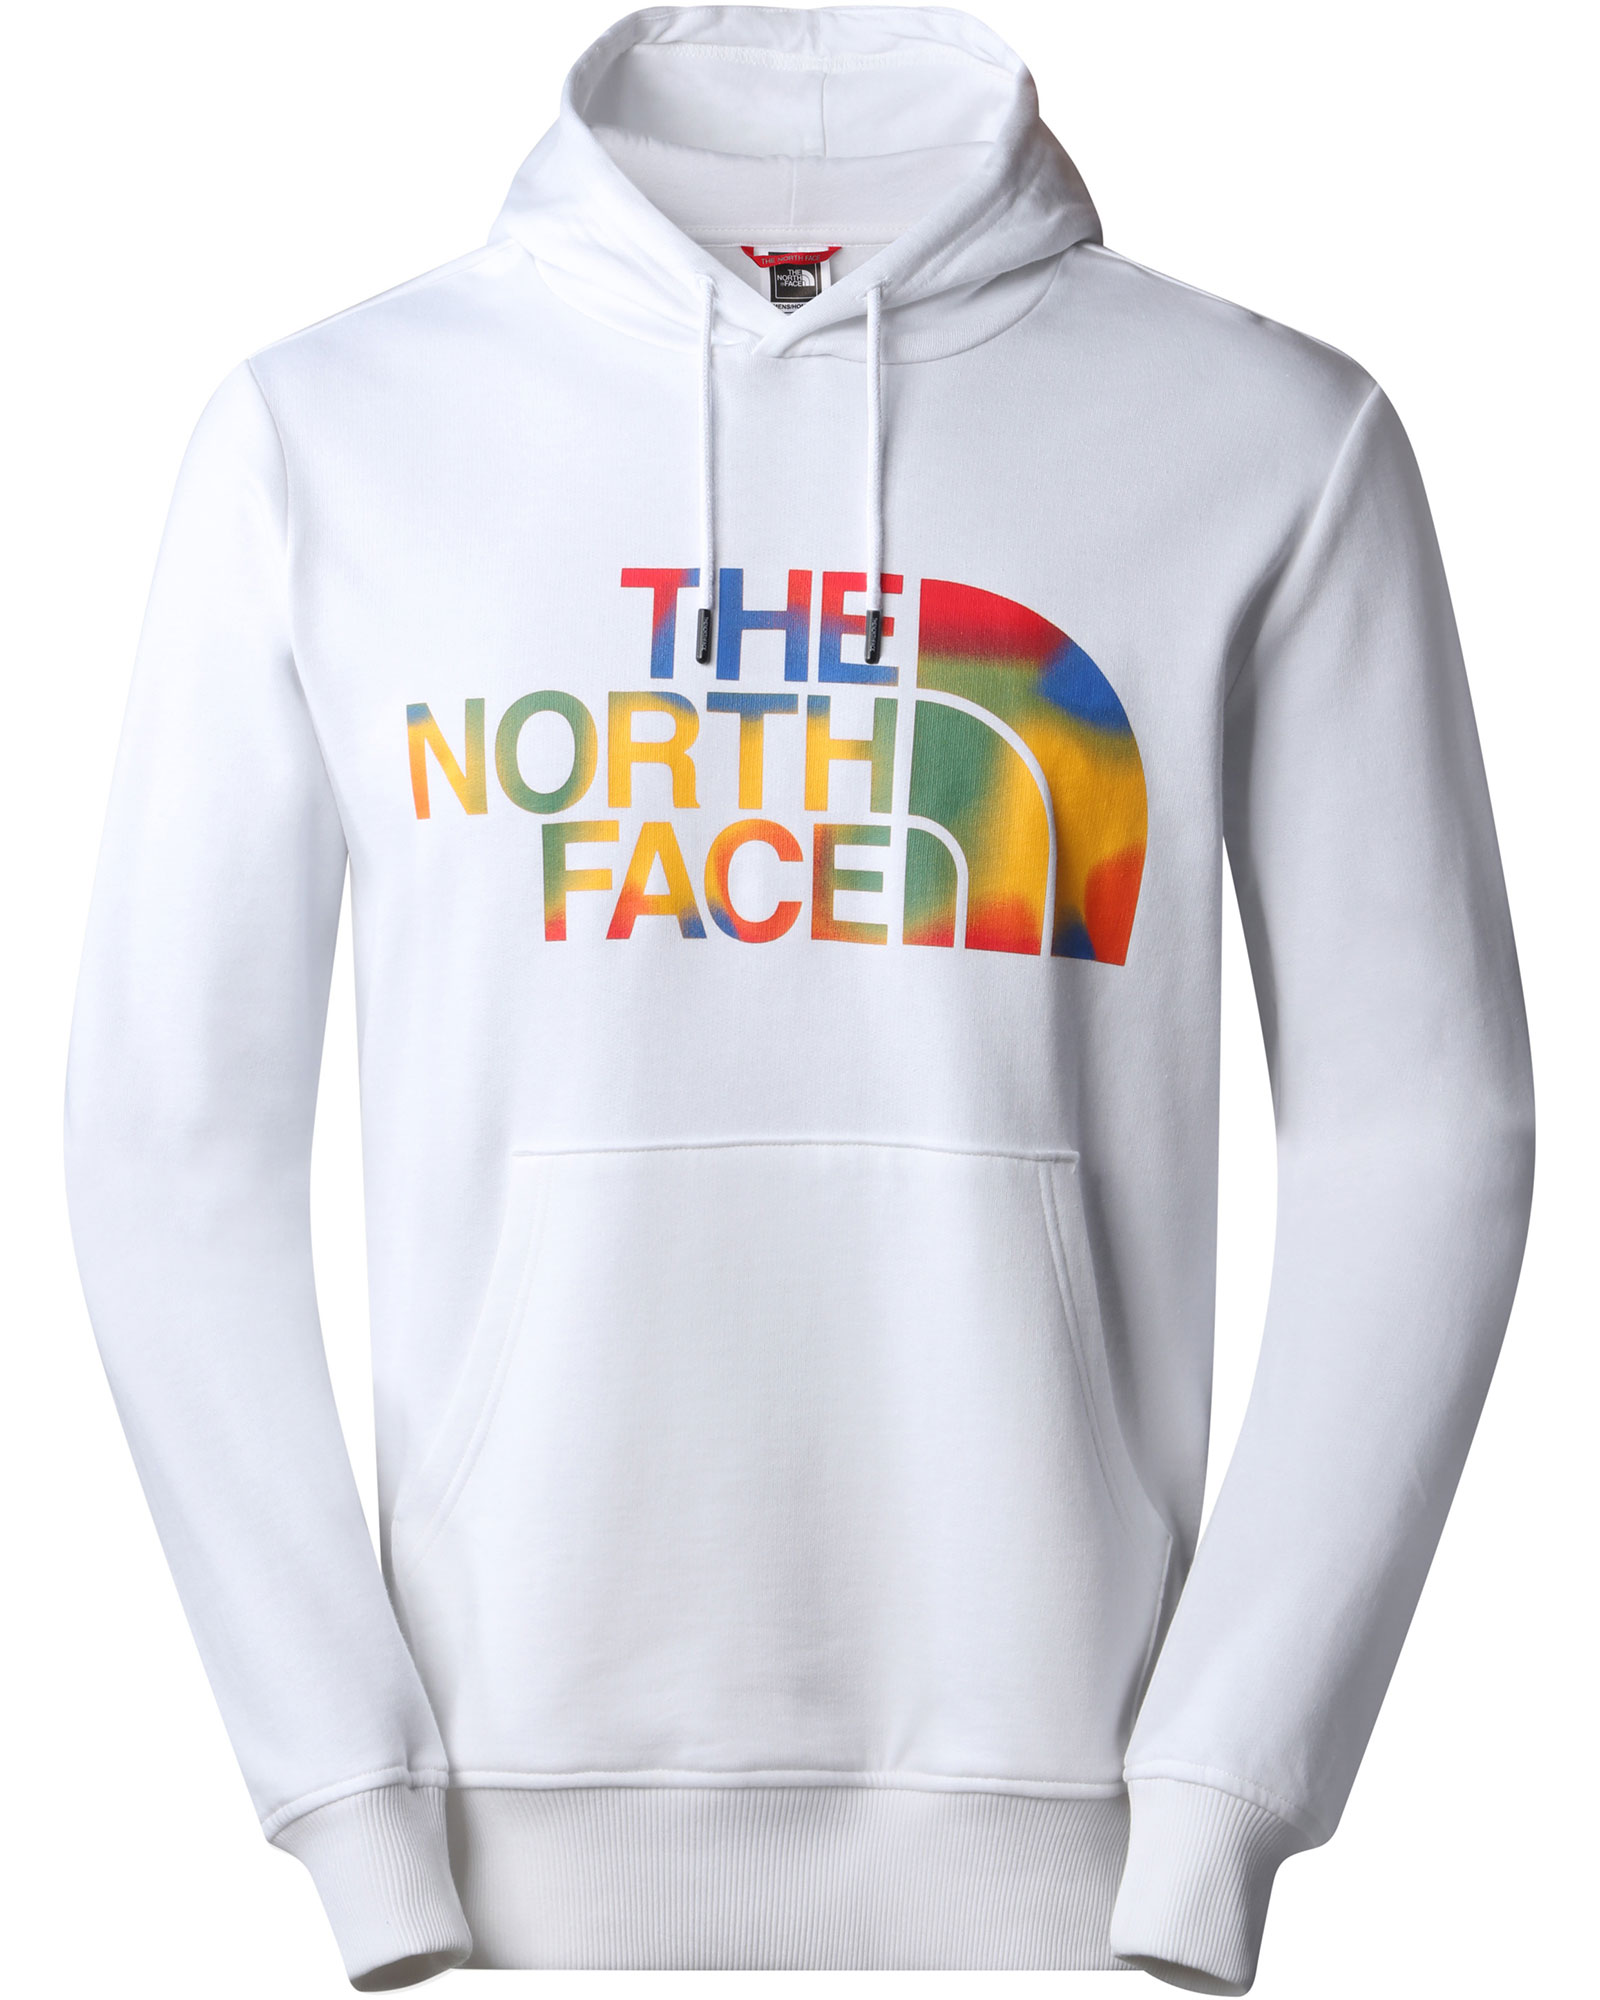 The North Face Men’s Standard Hoodie - TNF White/Super Sonic Print M